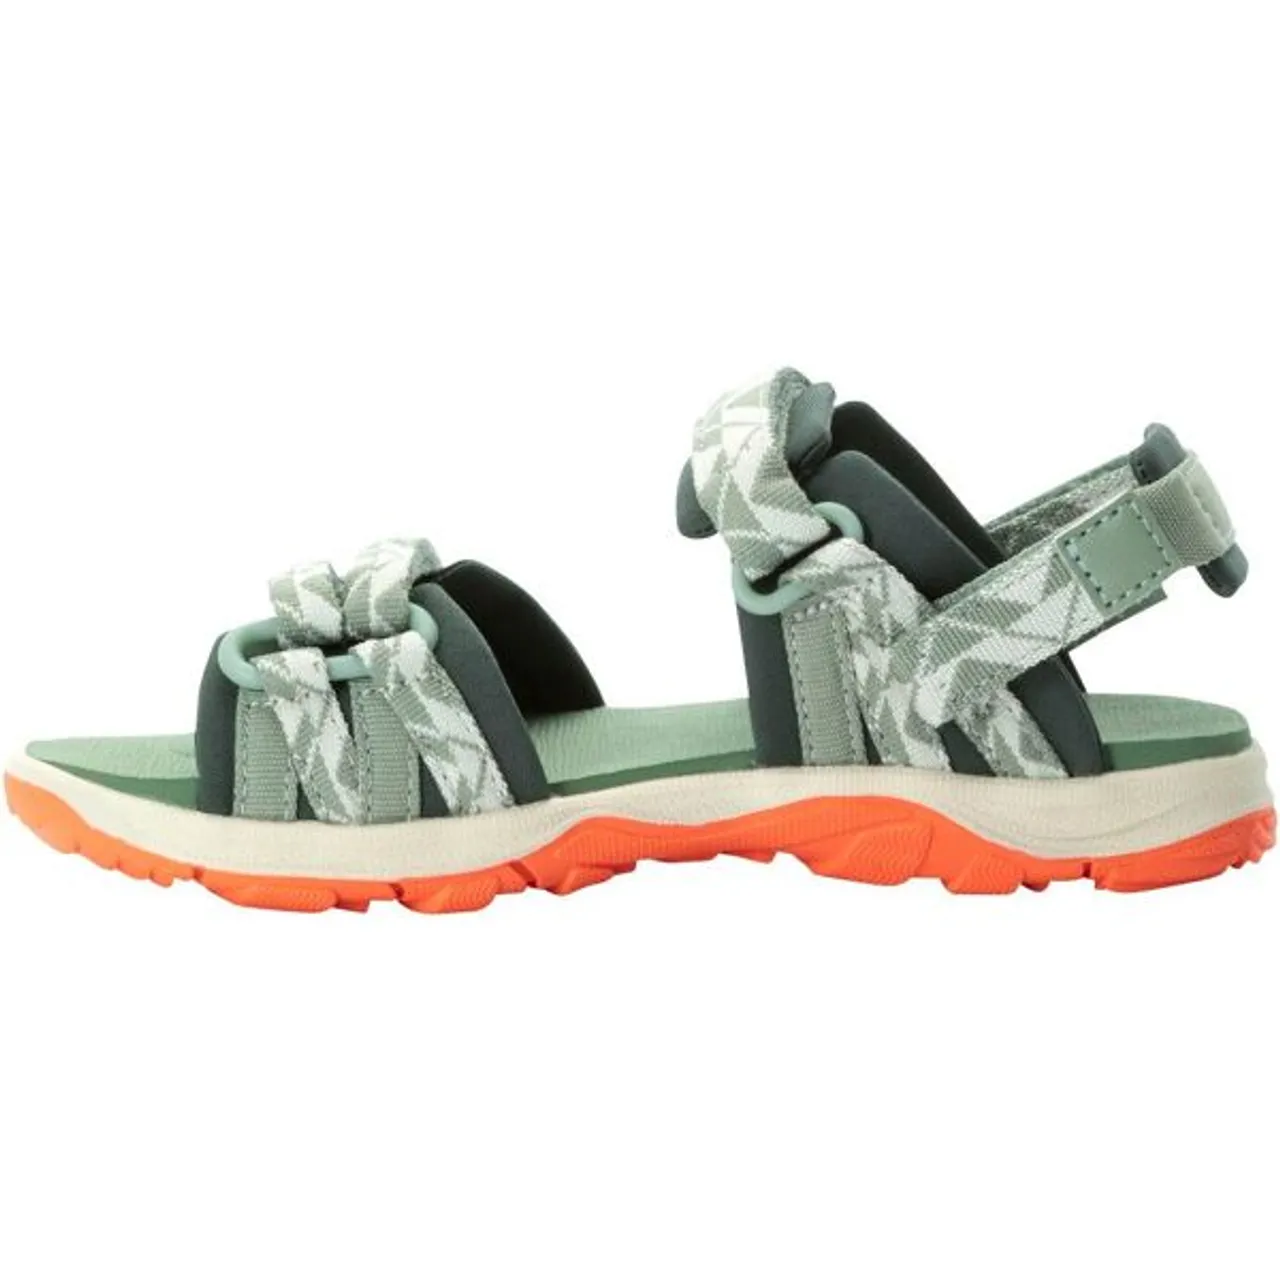 Sandale JACK WOLFSKIN "2 IN 1 SANDAL K" Gr. 32, grün (mint) Schuhe Damen Outdoor-Schuhe